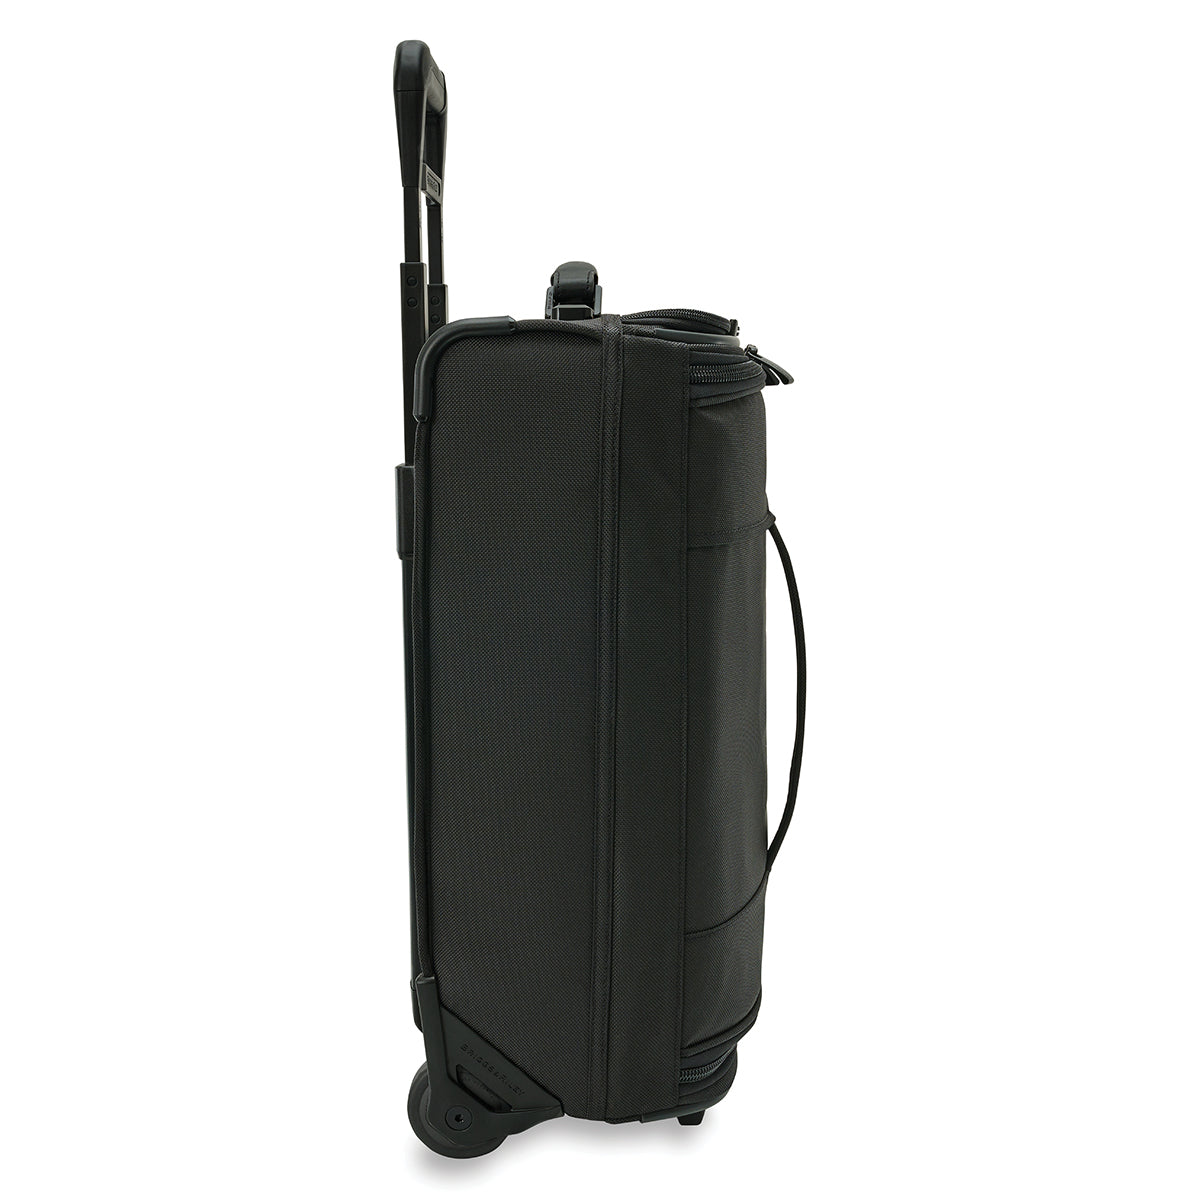 Briggs & Riley Baseline Global 2-Wheel Carry-On Duffle Bag